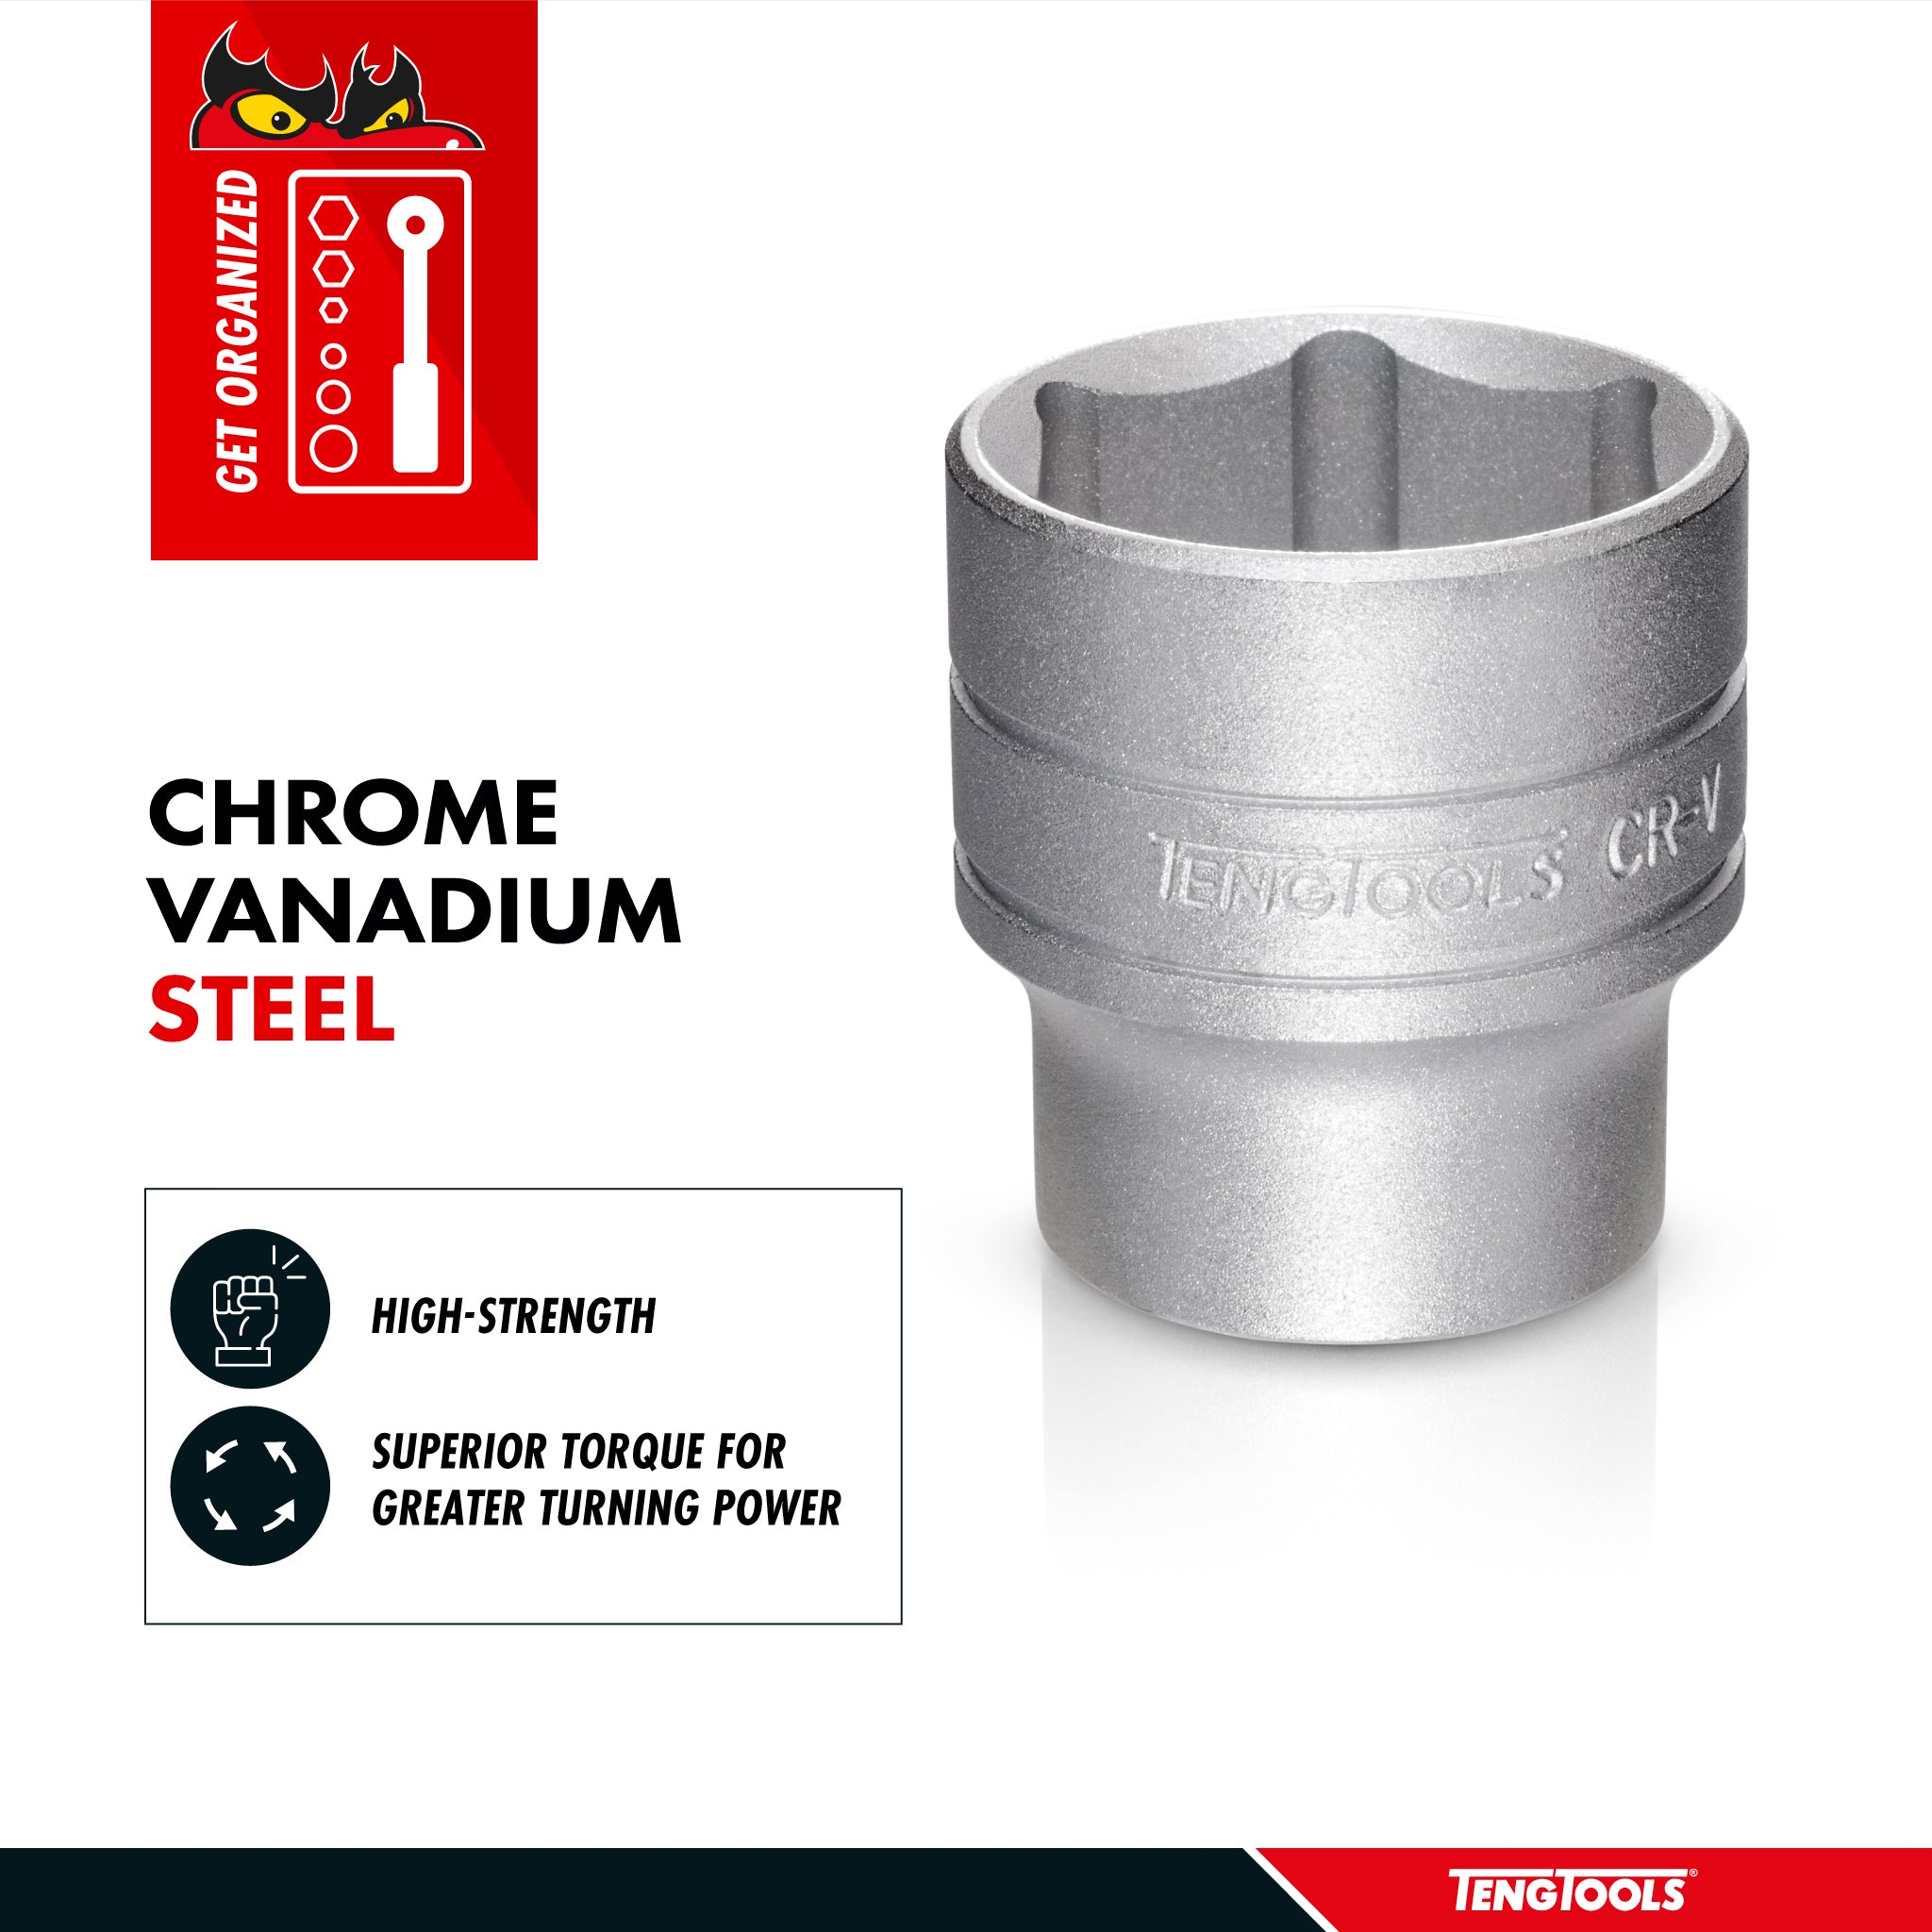 Teng Tools 1/2 Inch Drive 6 Point Metric Shallow Chrome Vanadium Sockets - 34mm